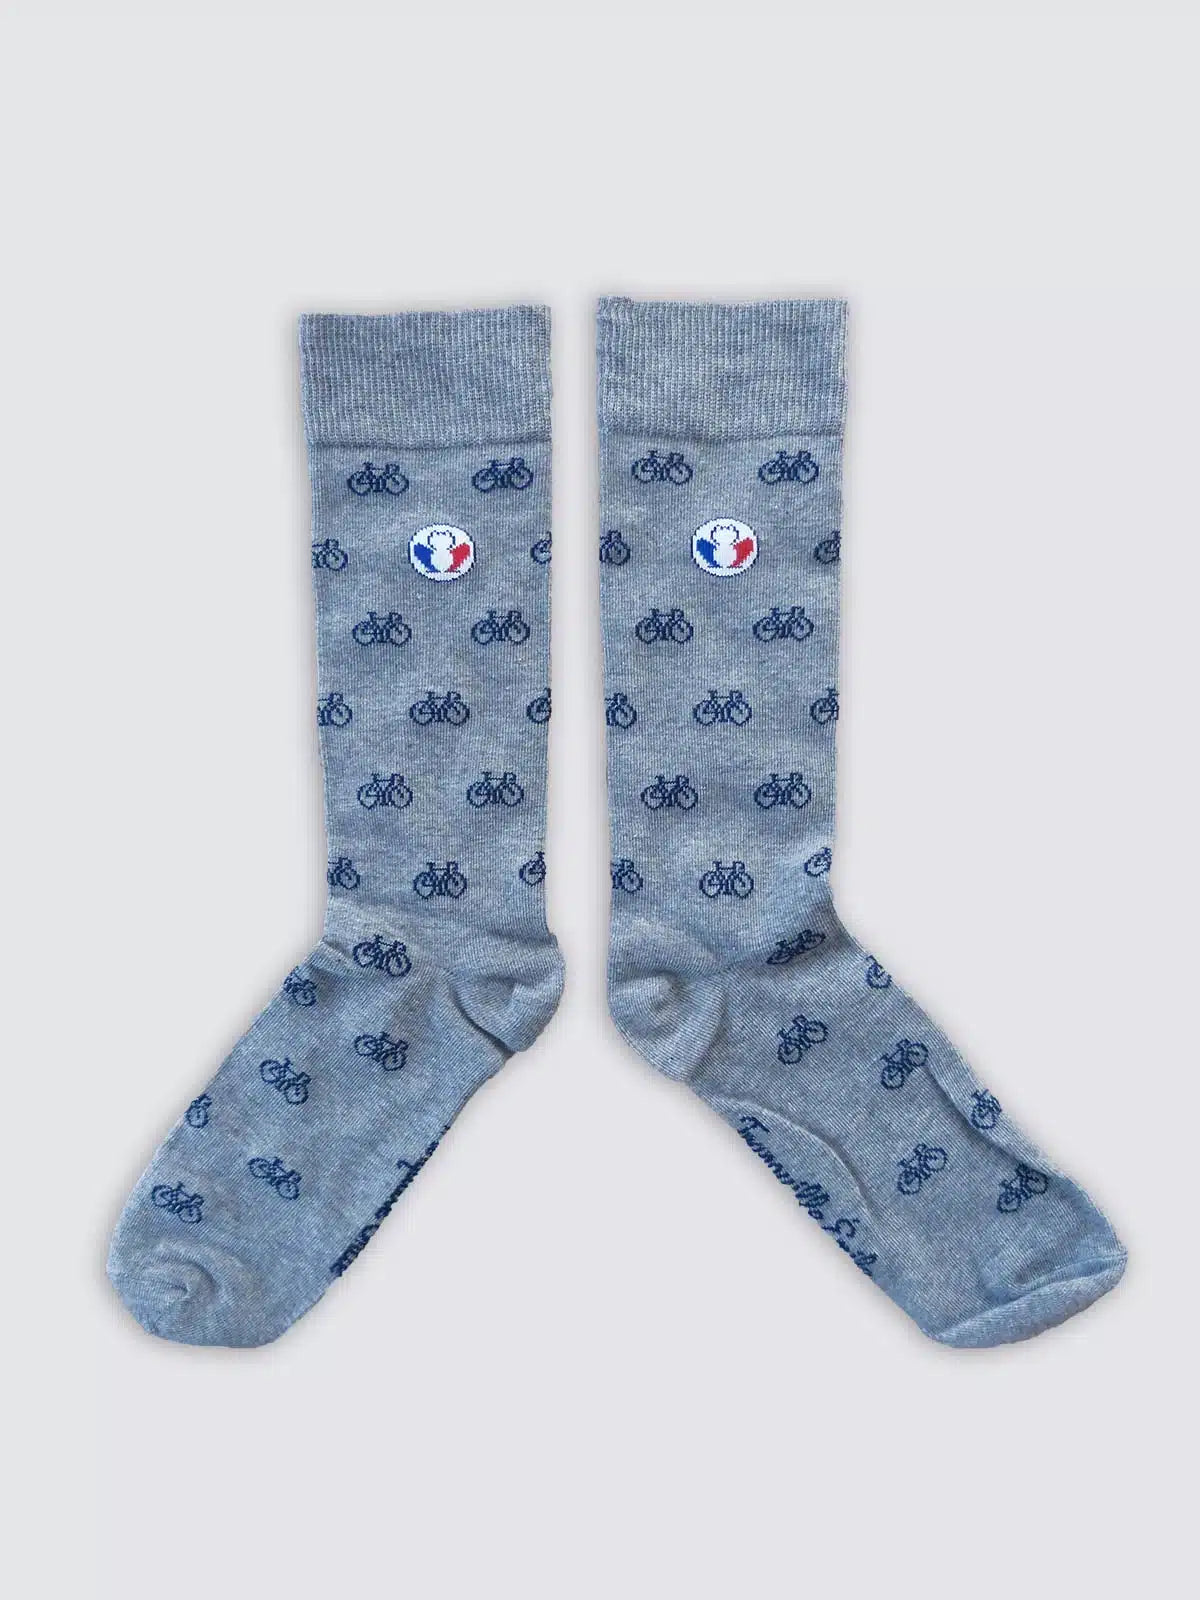 chaussettes-made-in-france-les-velos-grises-1_jpg.webp